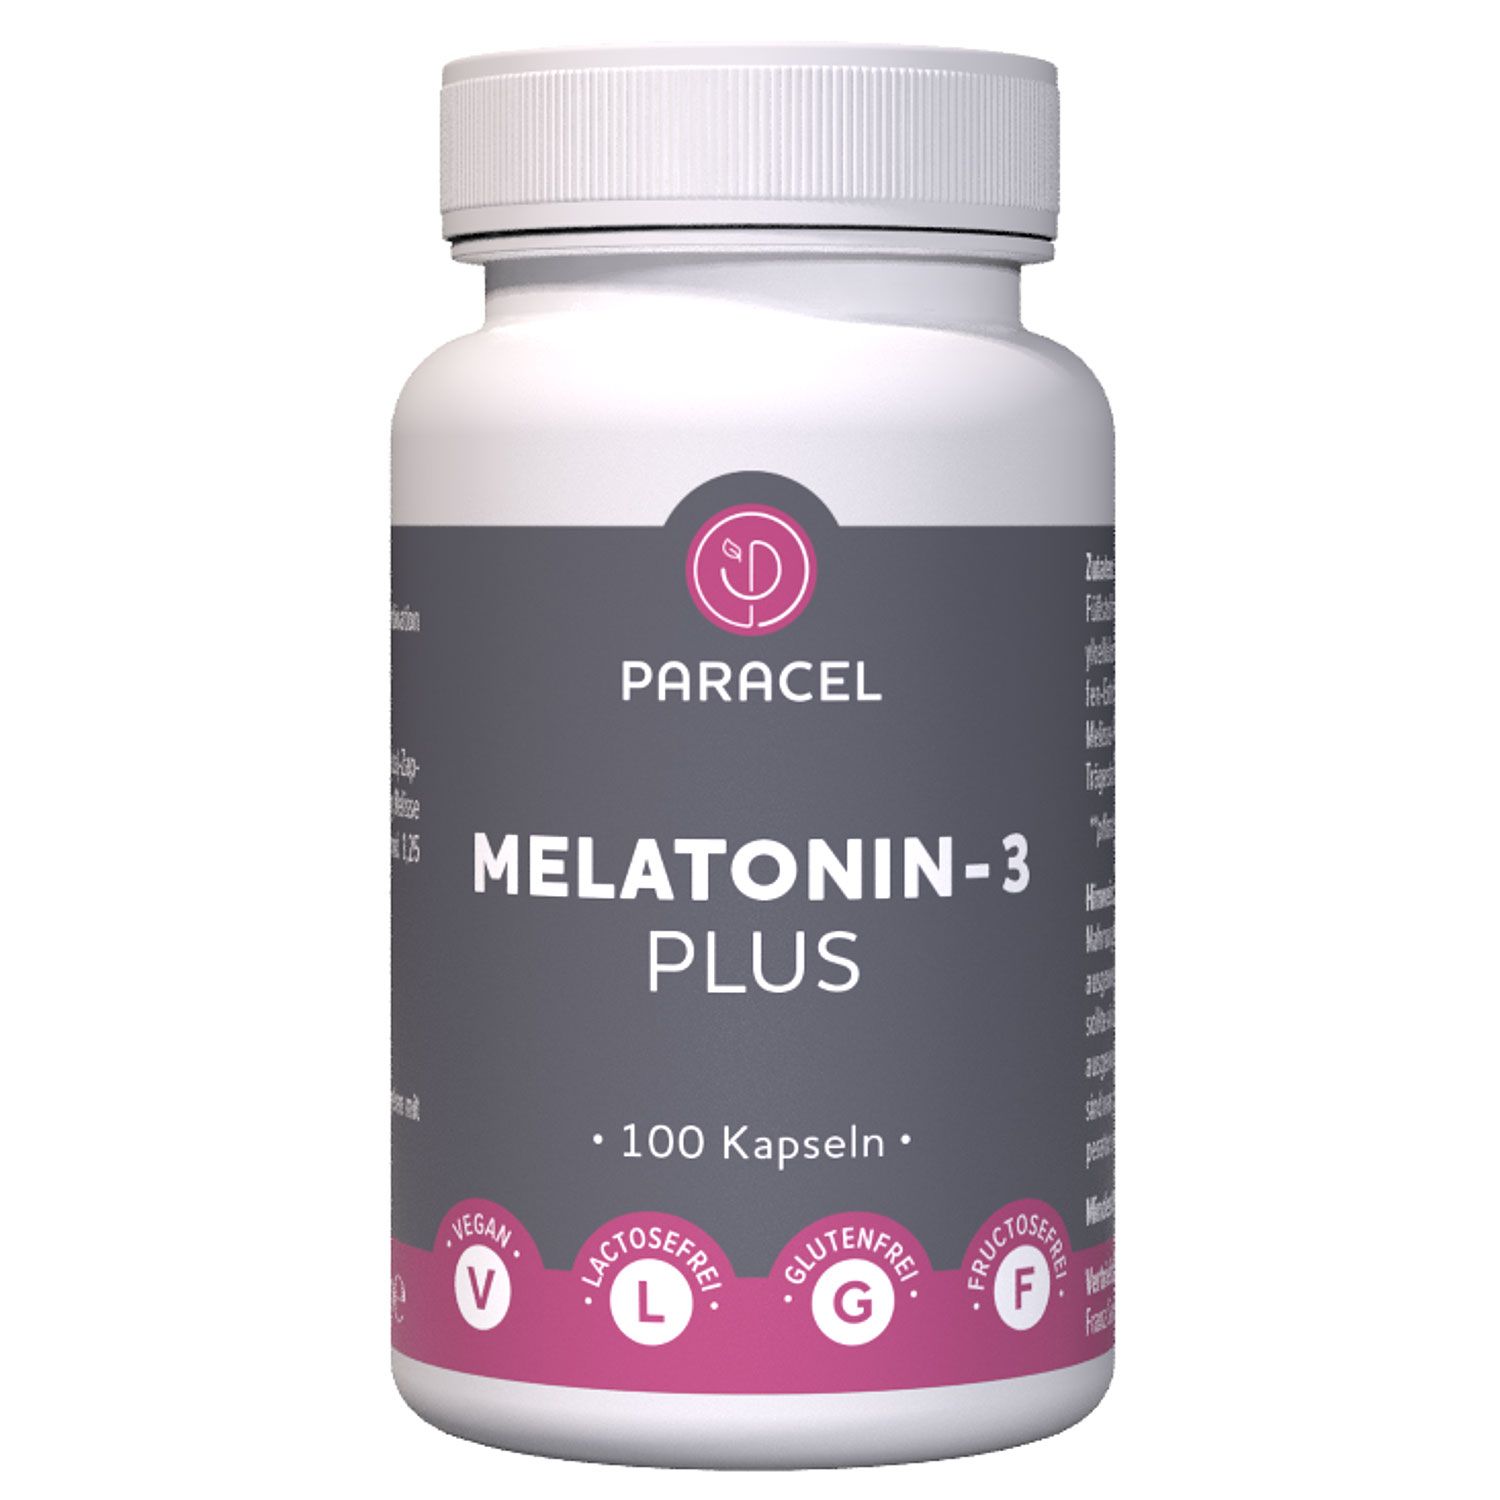 Paracel melatonin 3-plus capsules